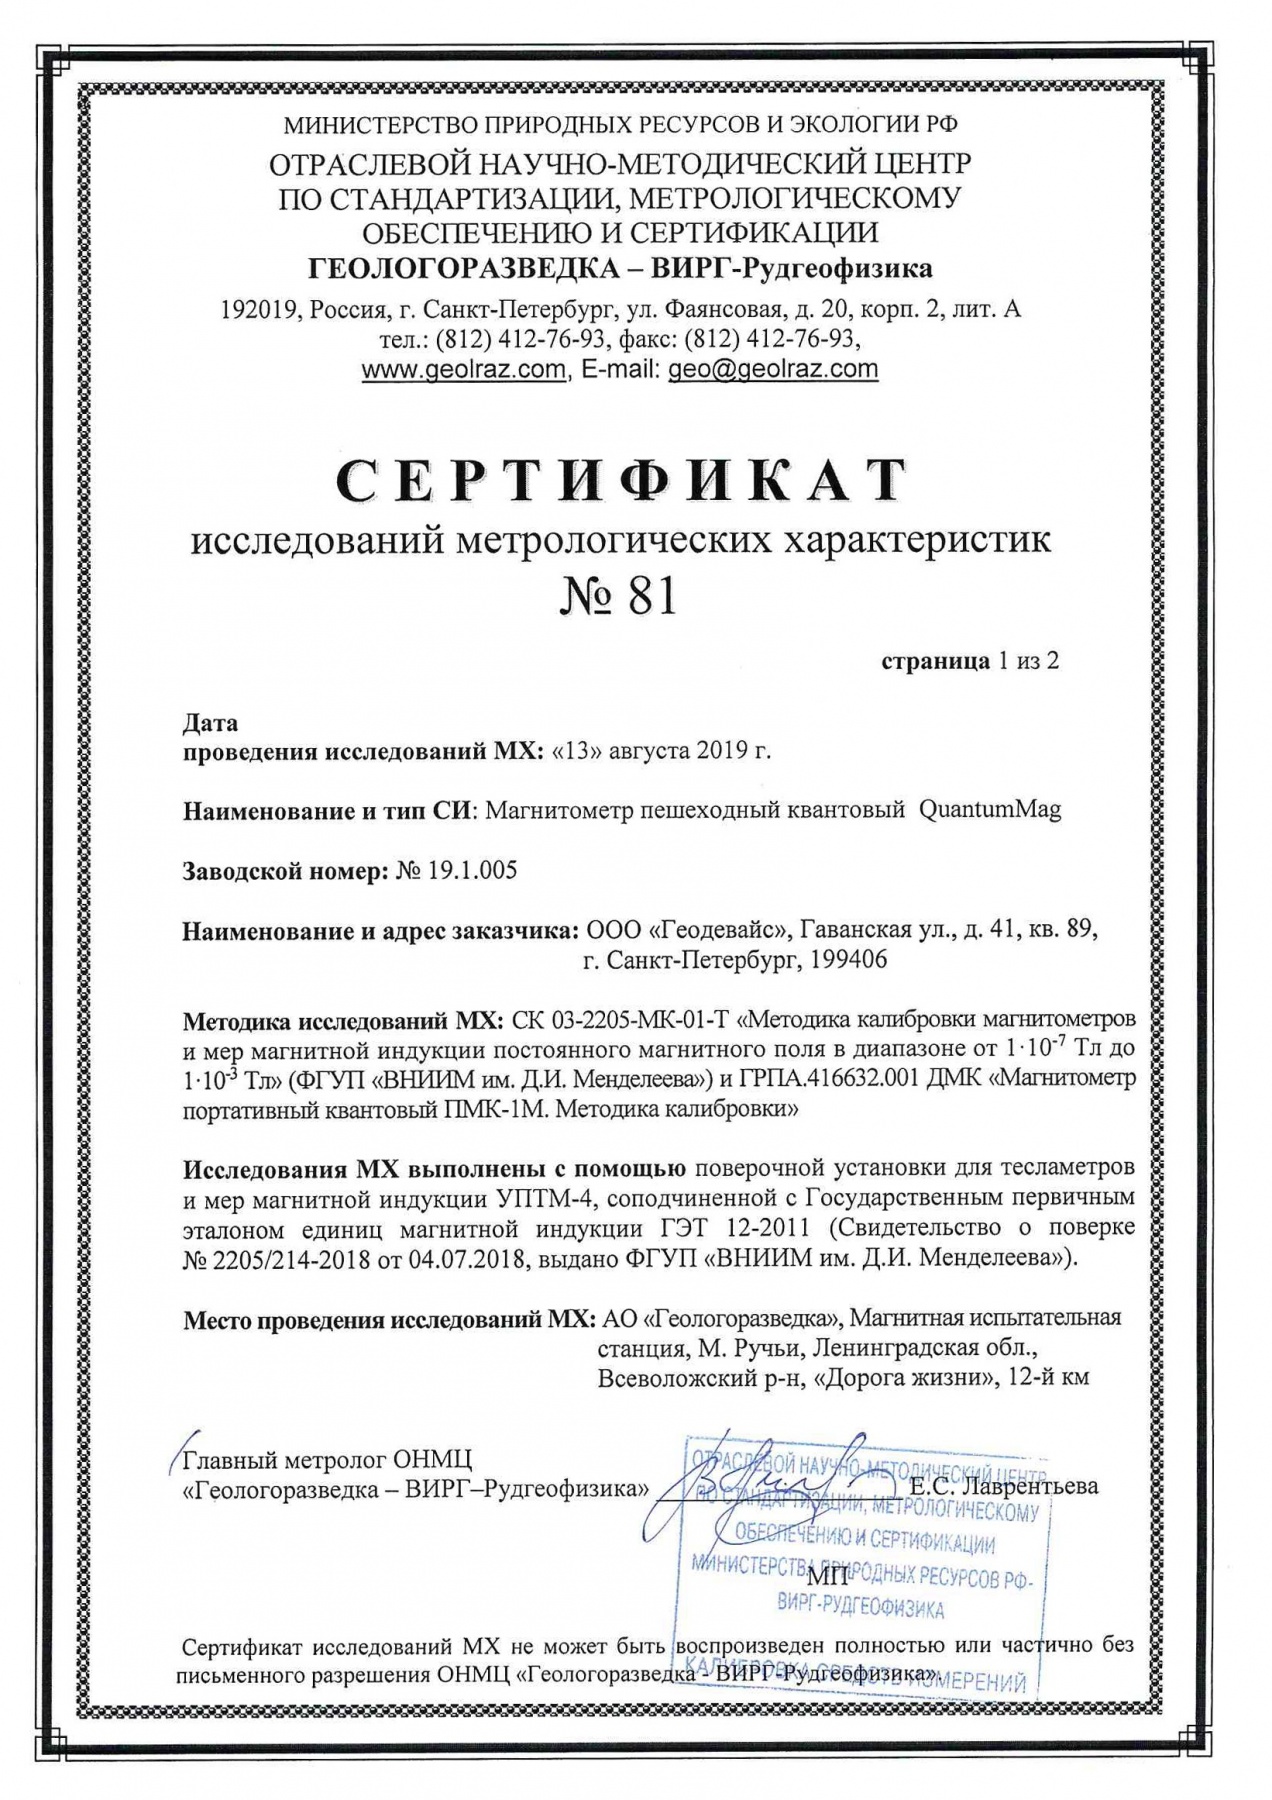 Сертификат исследований метрологических характеристик магнитометра QuantumMag